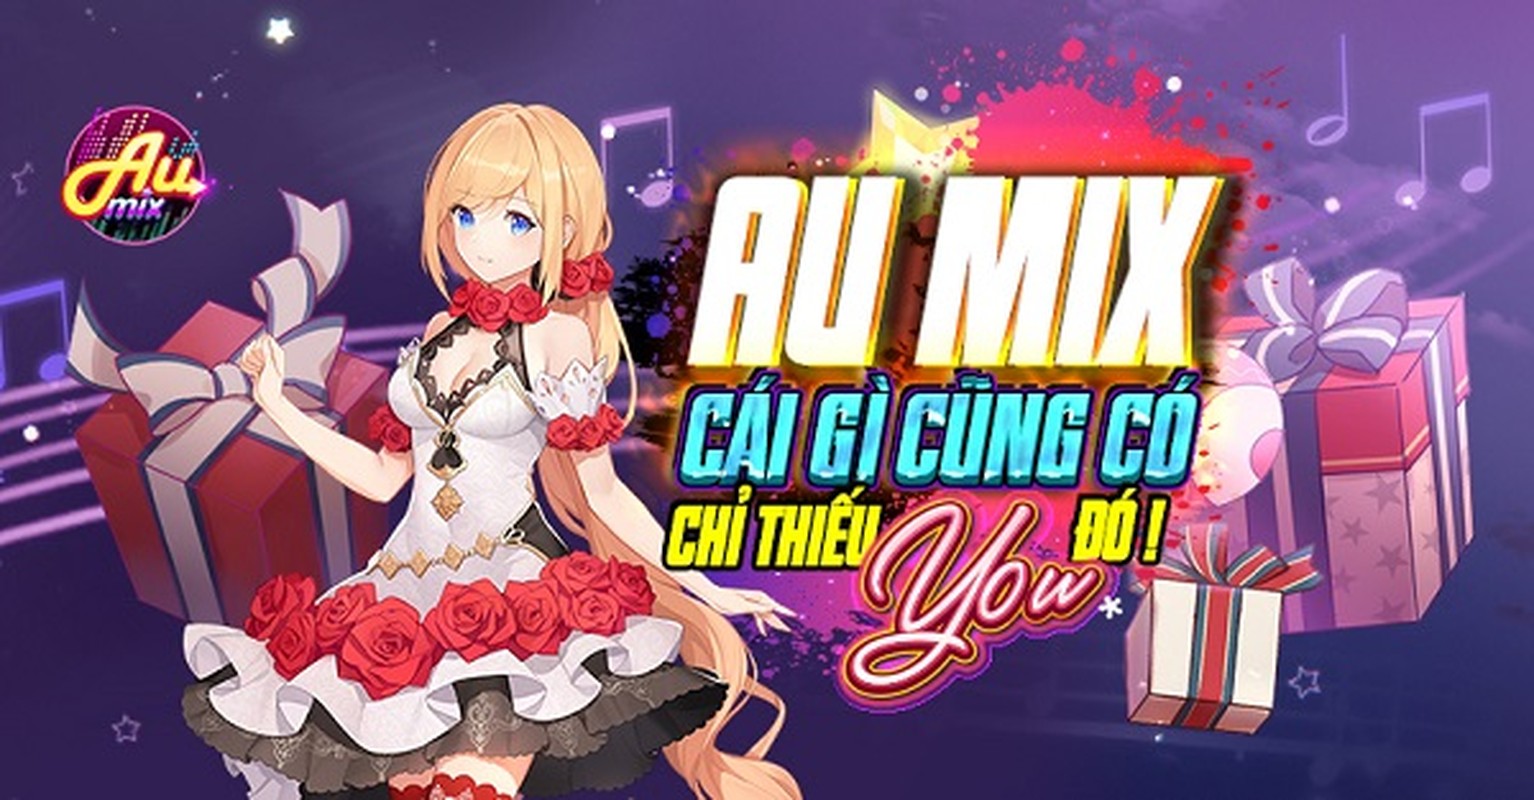 Soi Au Mix - game vu dao thoi trang bom tan mua COVID-19